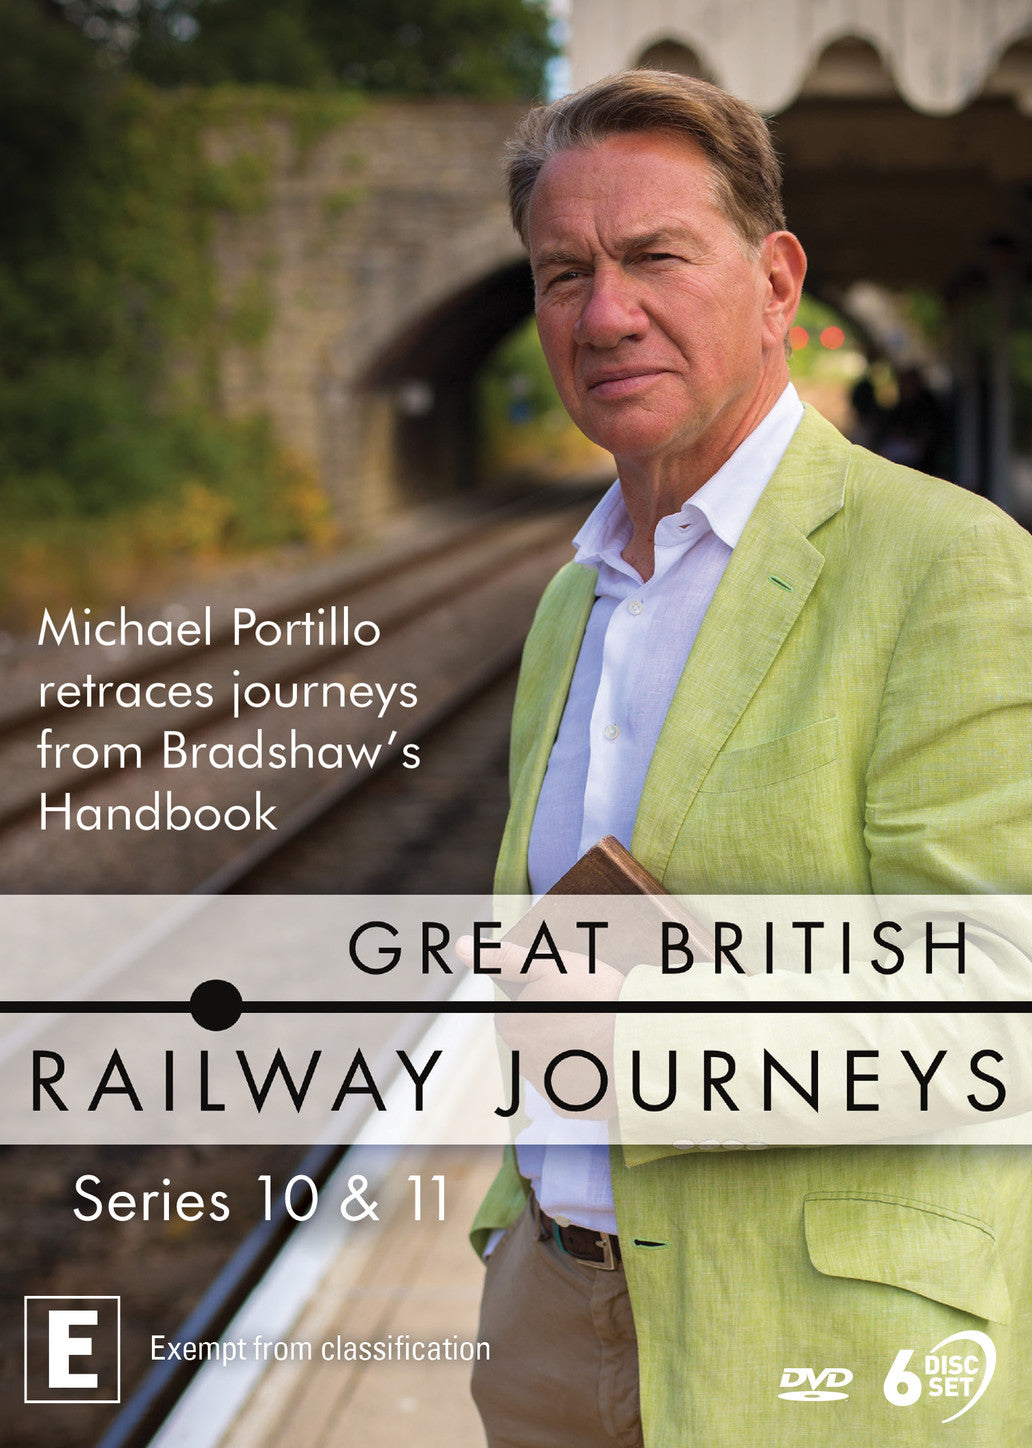 GREAT BRITISH RAILWAY JOURNEYS WITH MICHAEL PORTILLO: SERIES 10 & 11